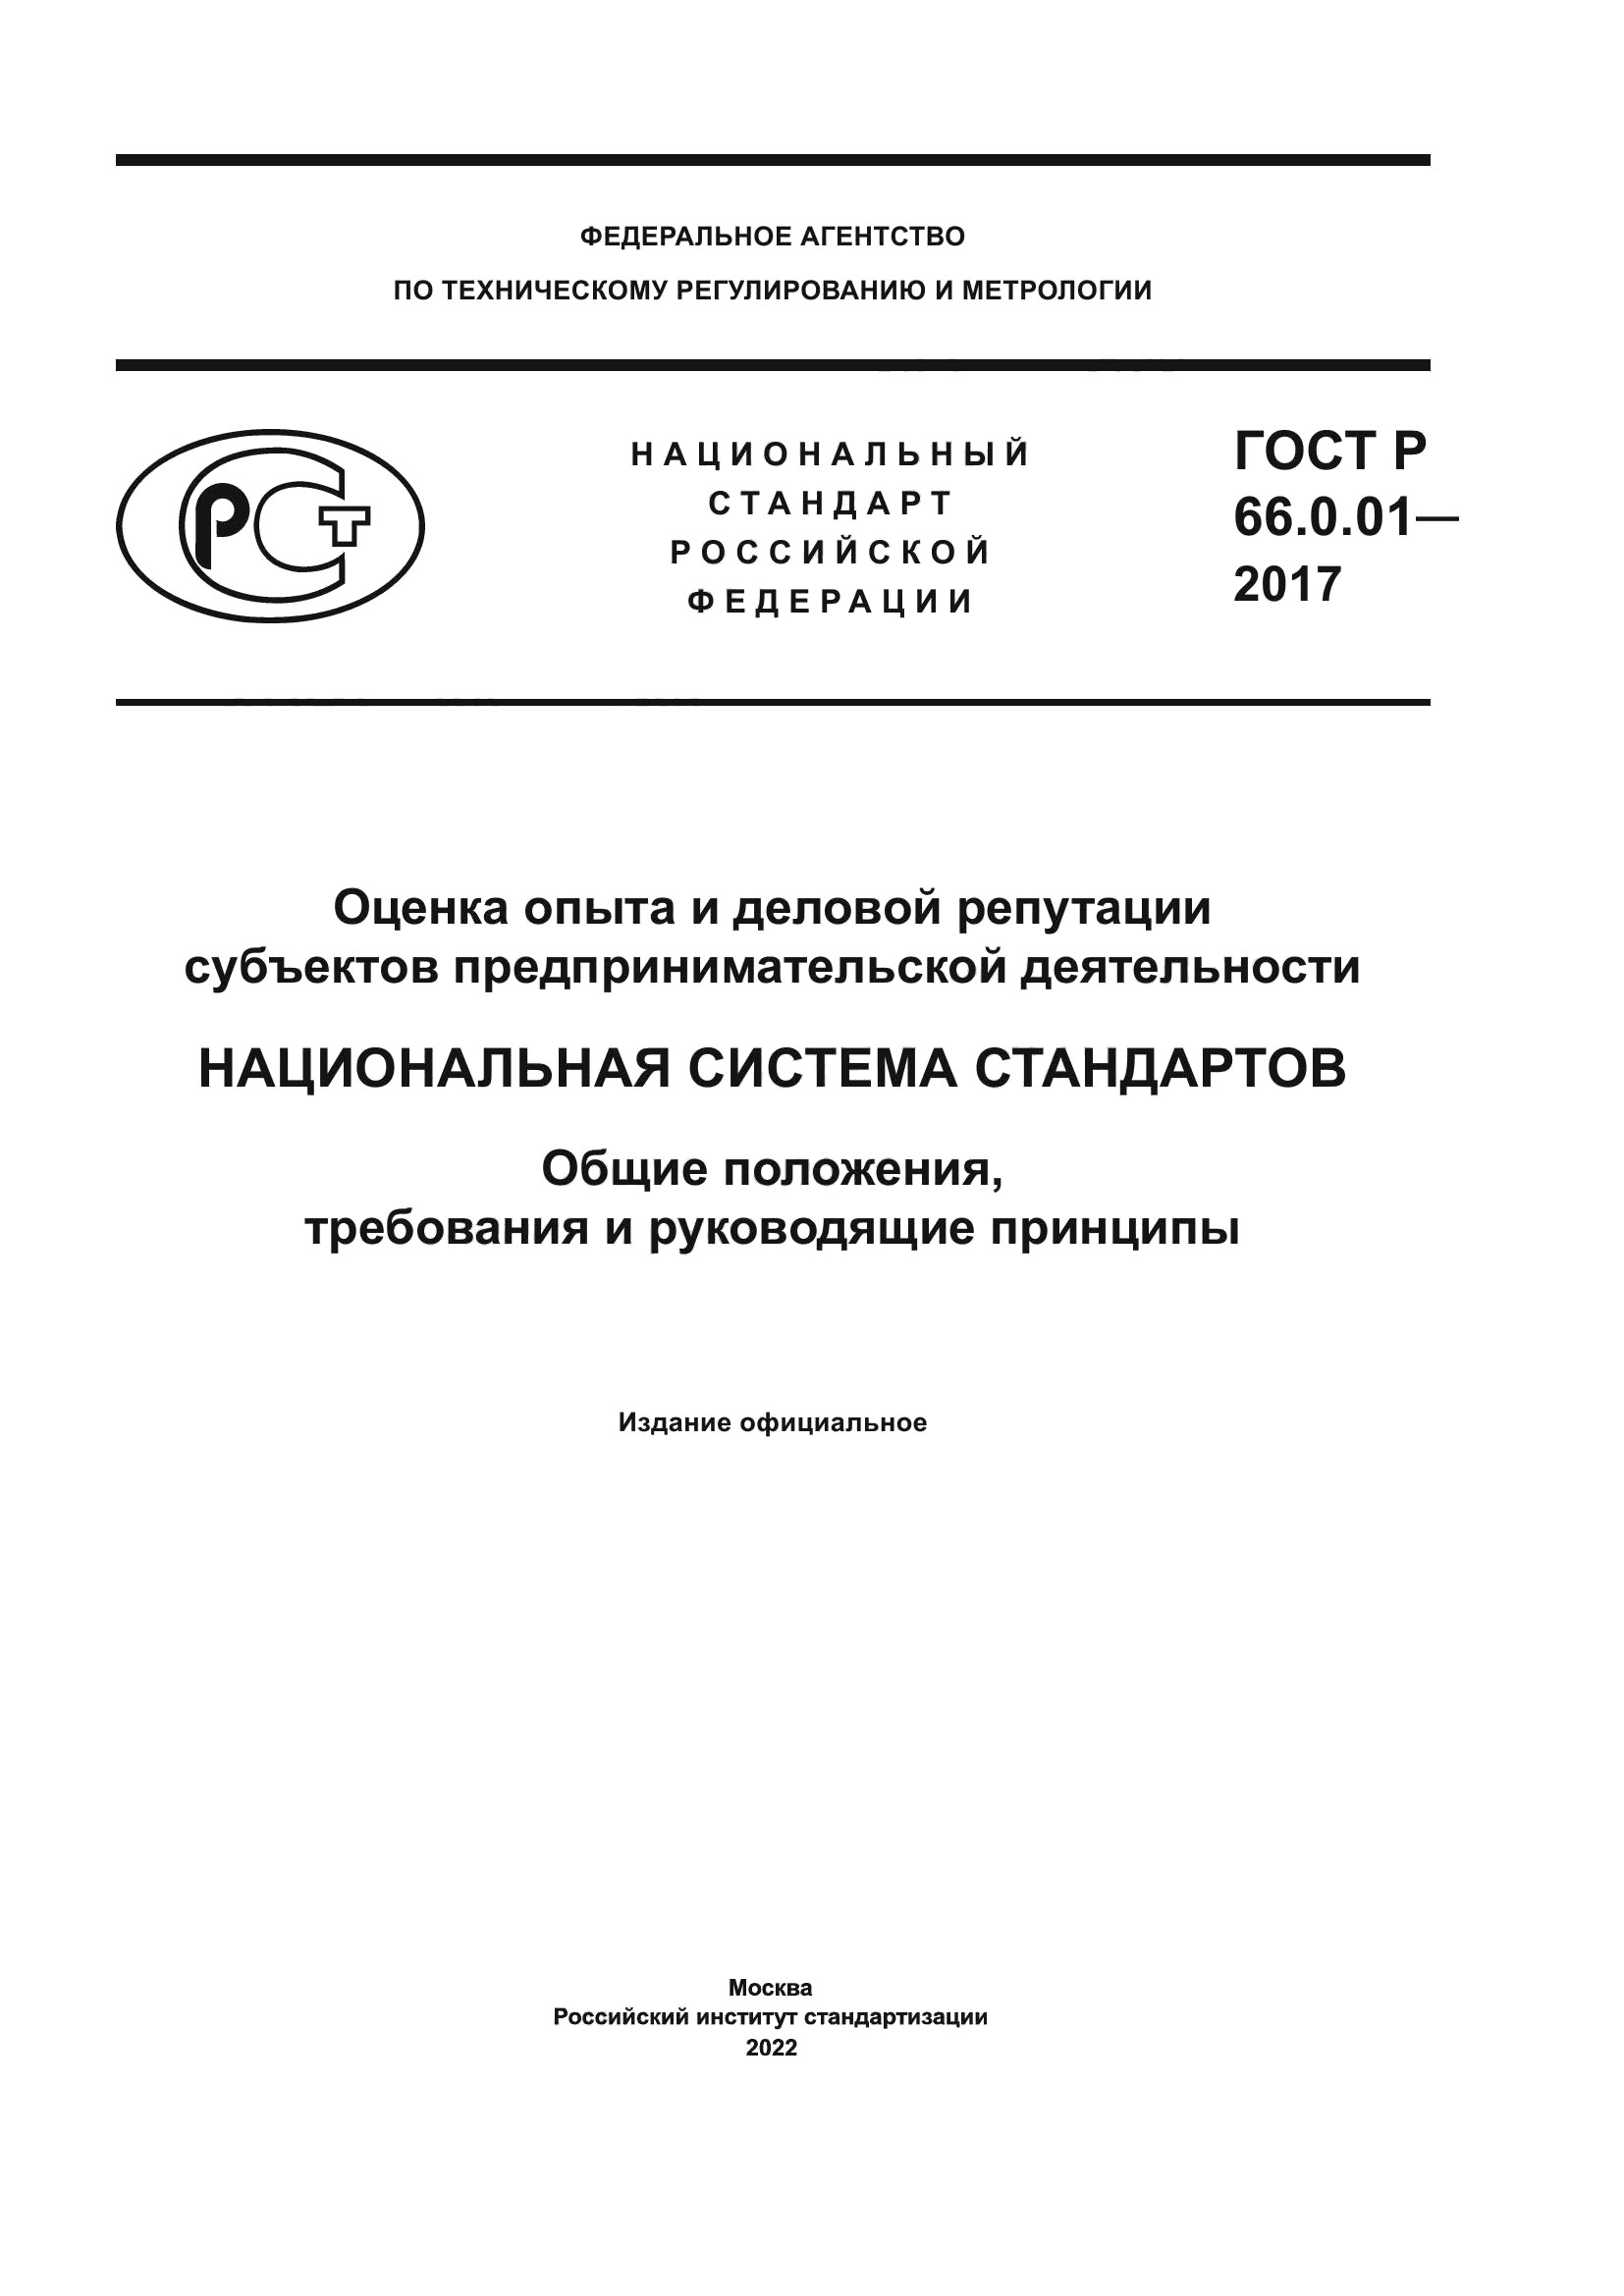 ГОСТ Р 66.0.01-2017